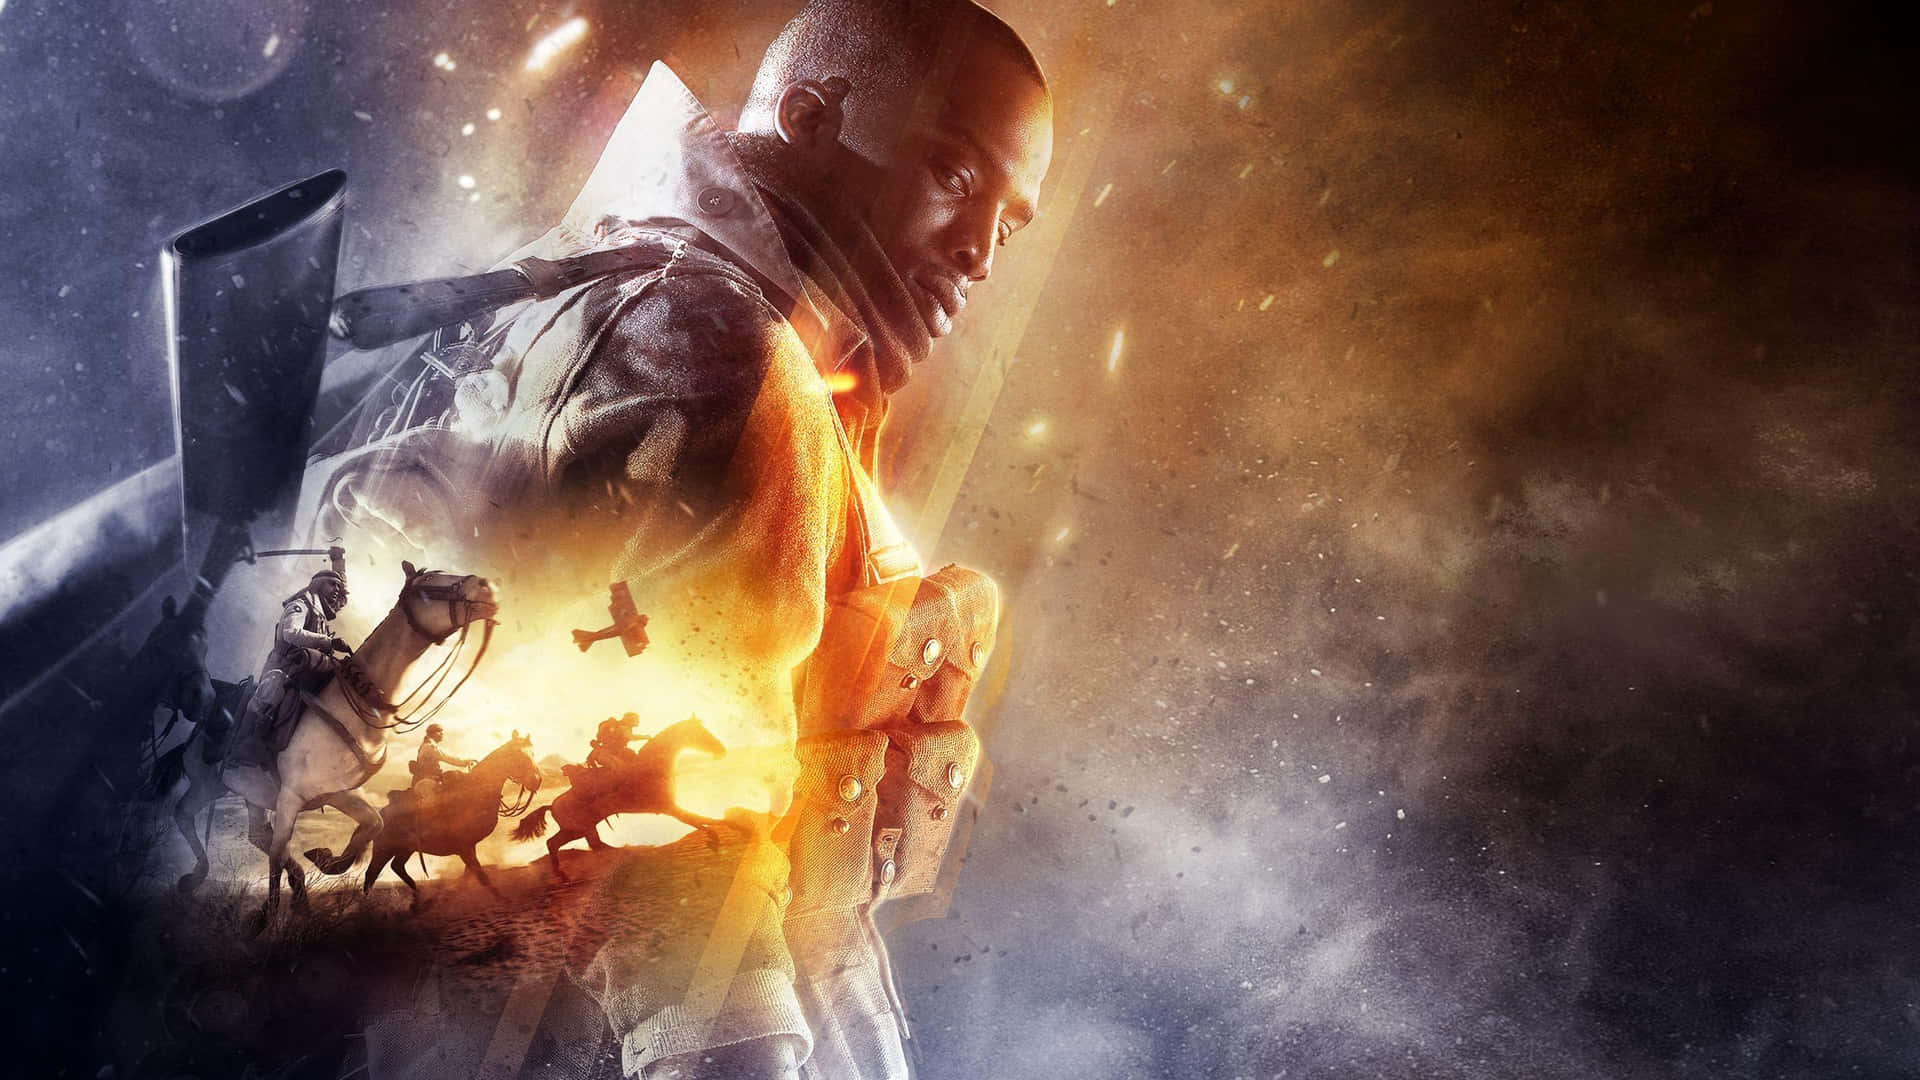 1440p Battlefield 1 Burning Arm Background